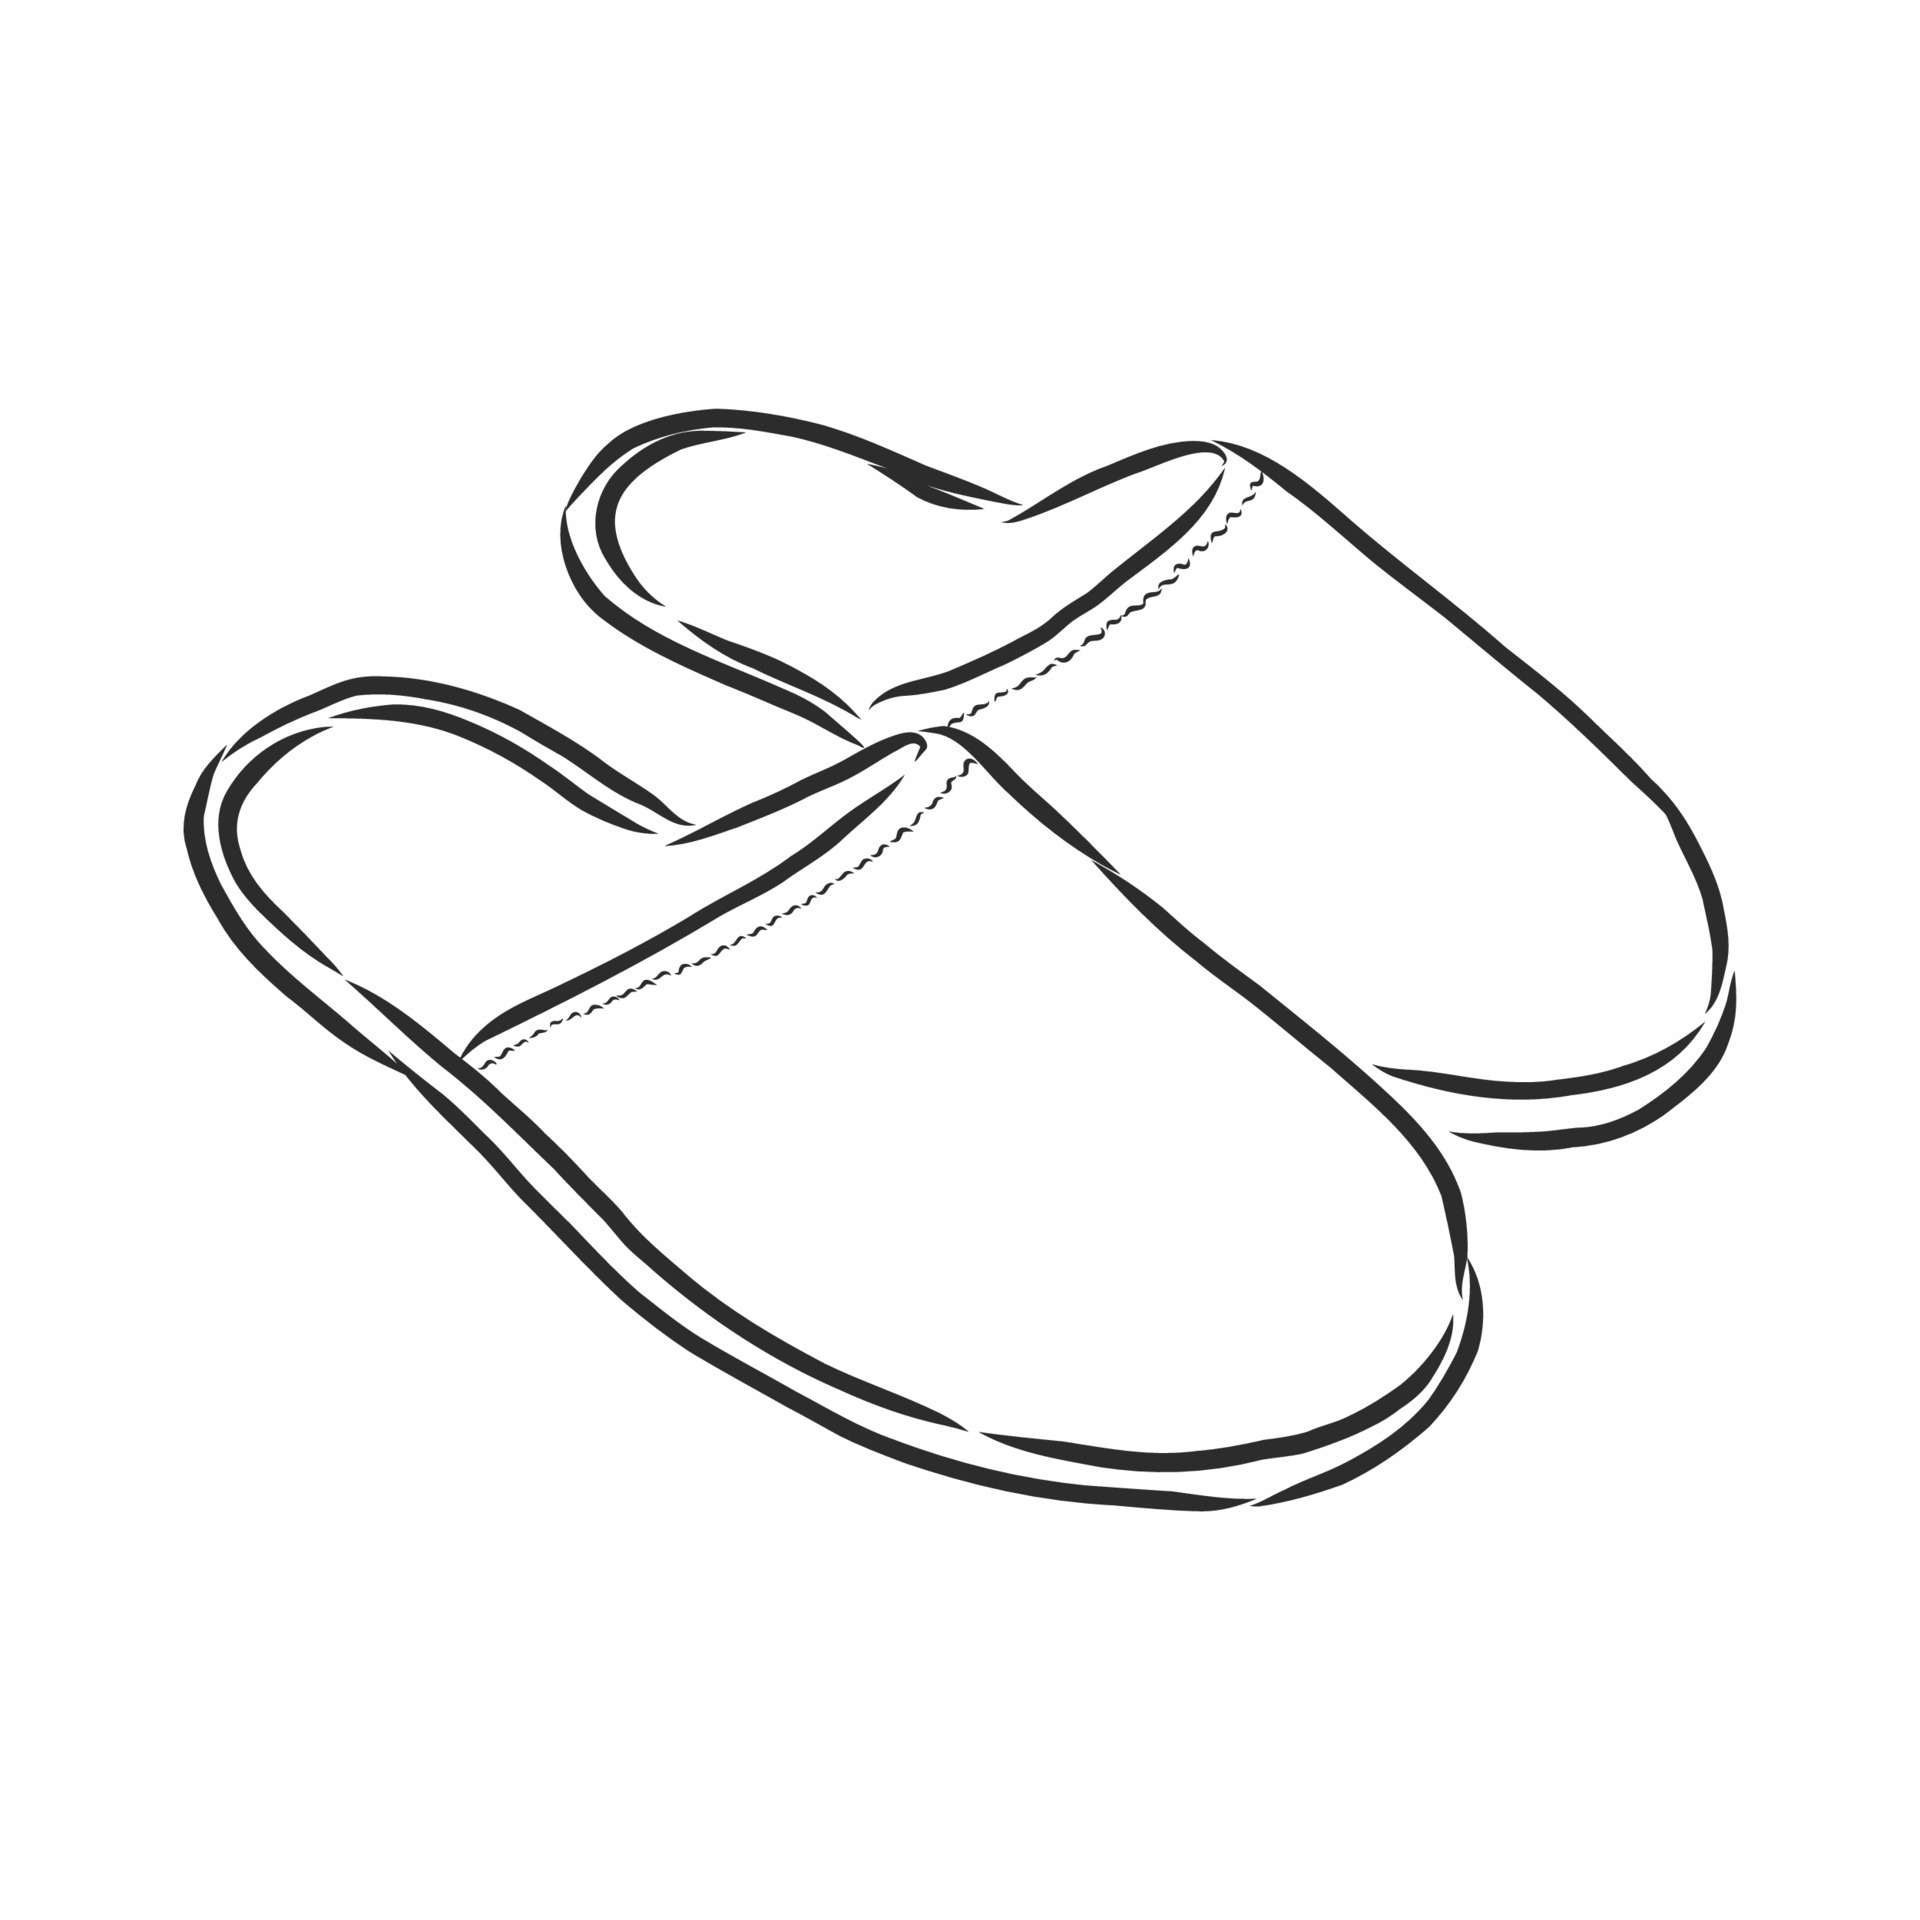 Sketch of slippers Royalty Free Vector Image  VectorStock